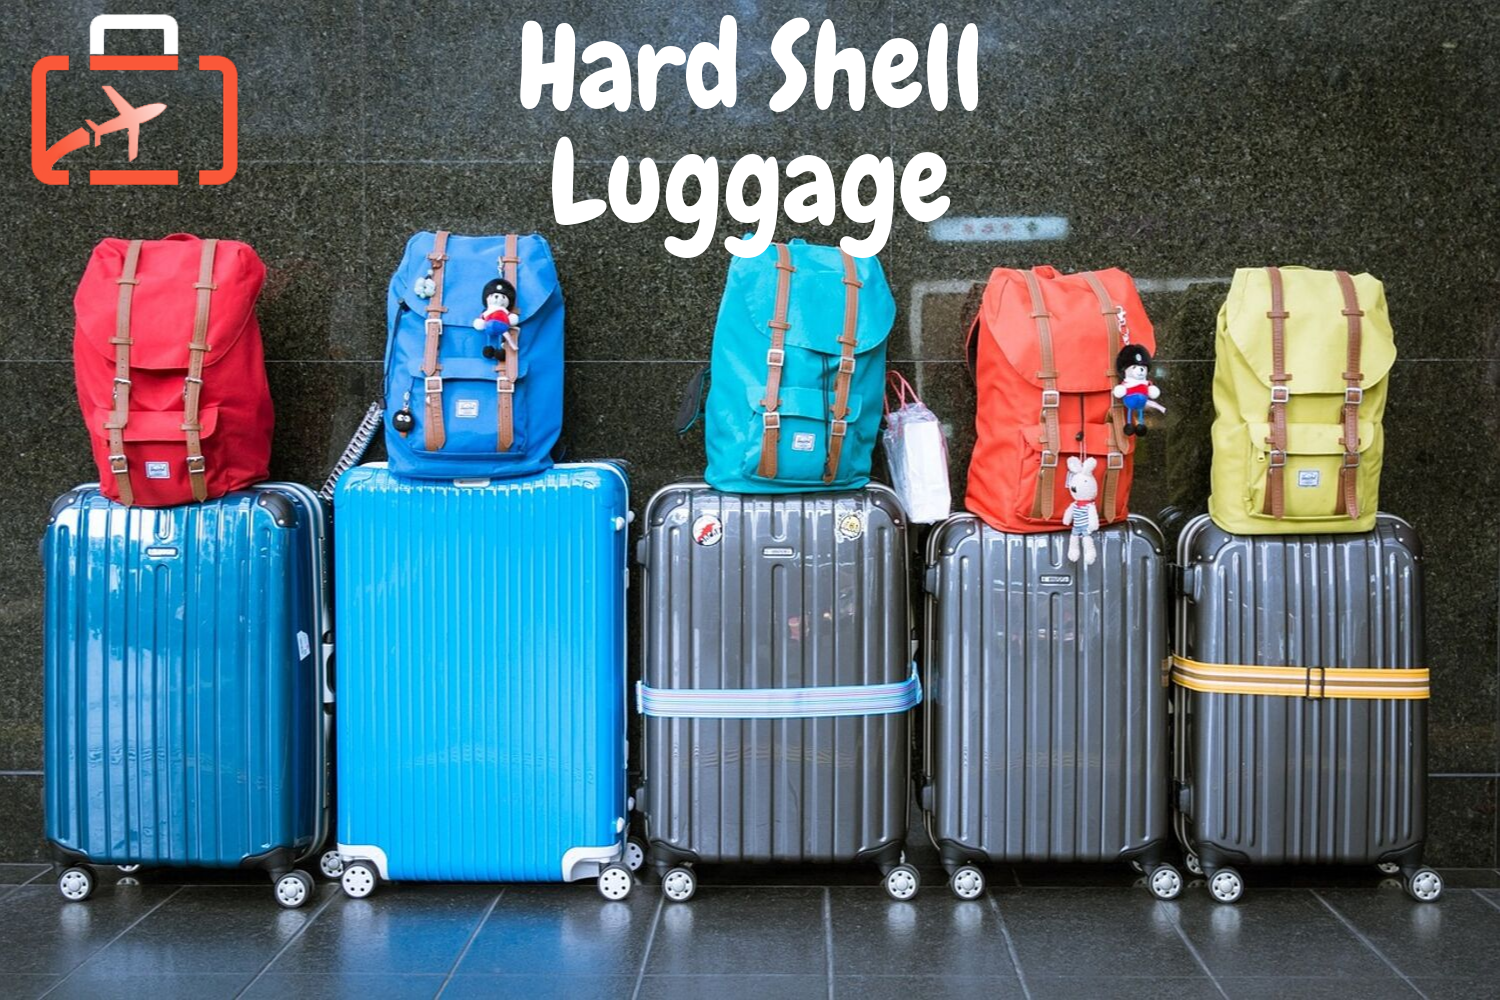 Hard Shell Luggage VS Soft Shell Luggage For International Travel ...